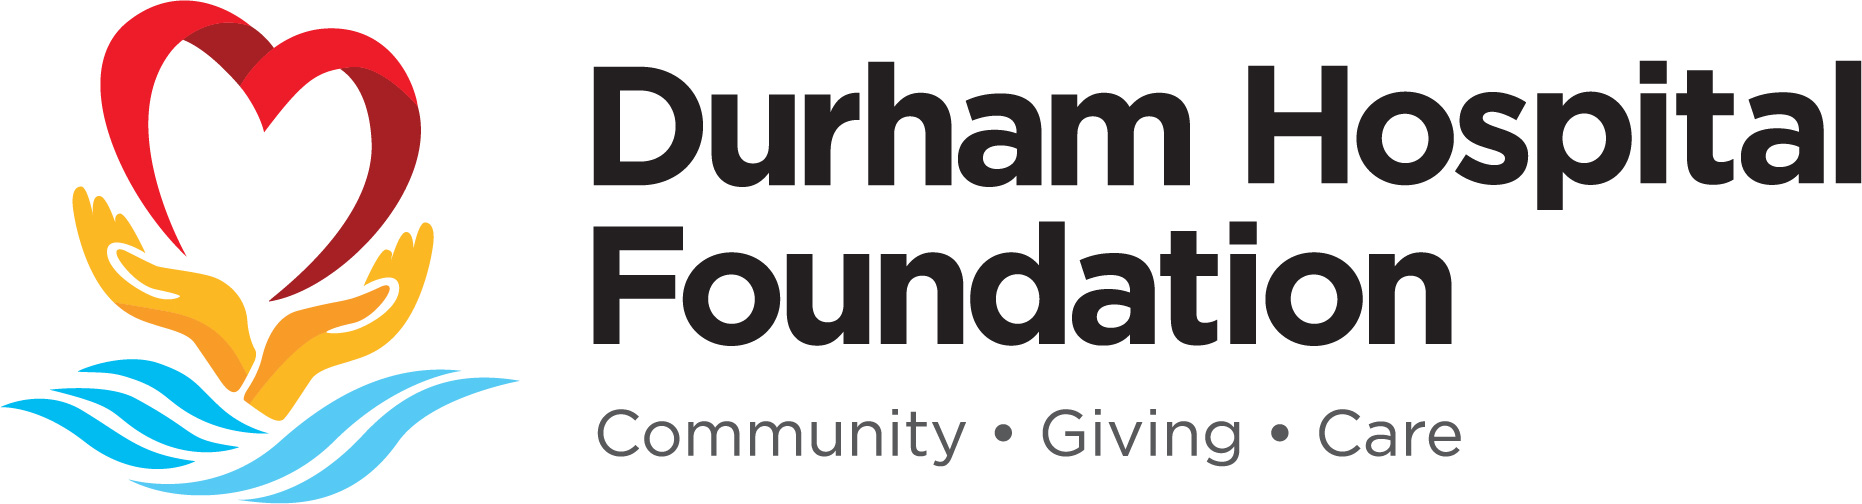 DURHAM HOSPITAL FOUNDATION logo